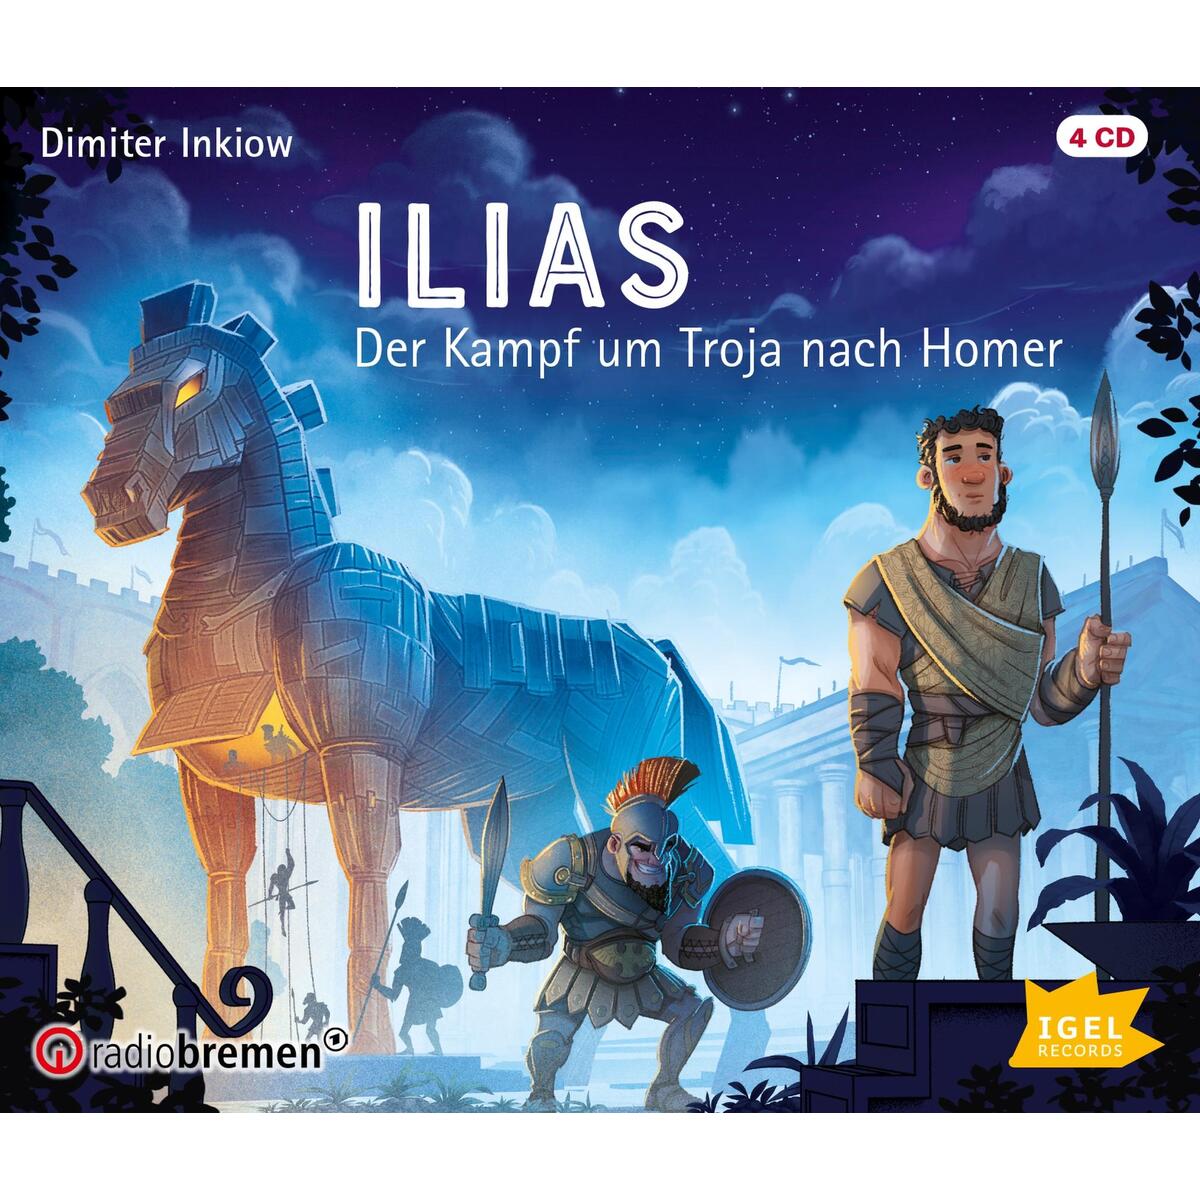 Ilias von Igel Records